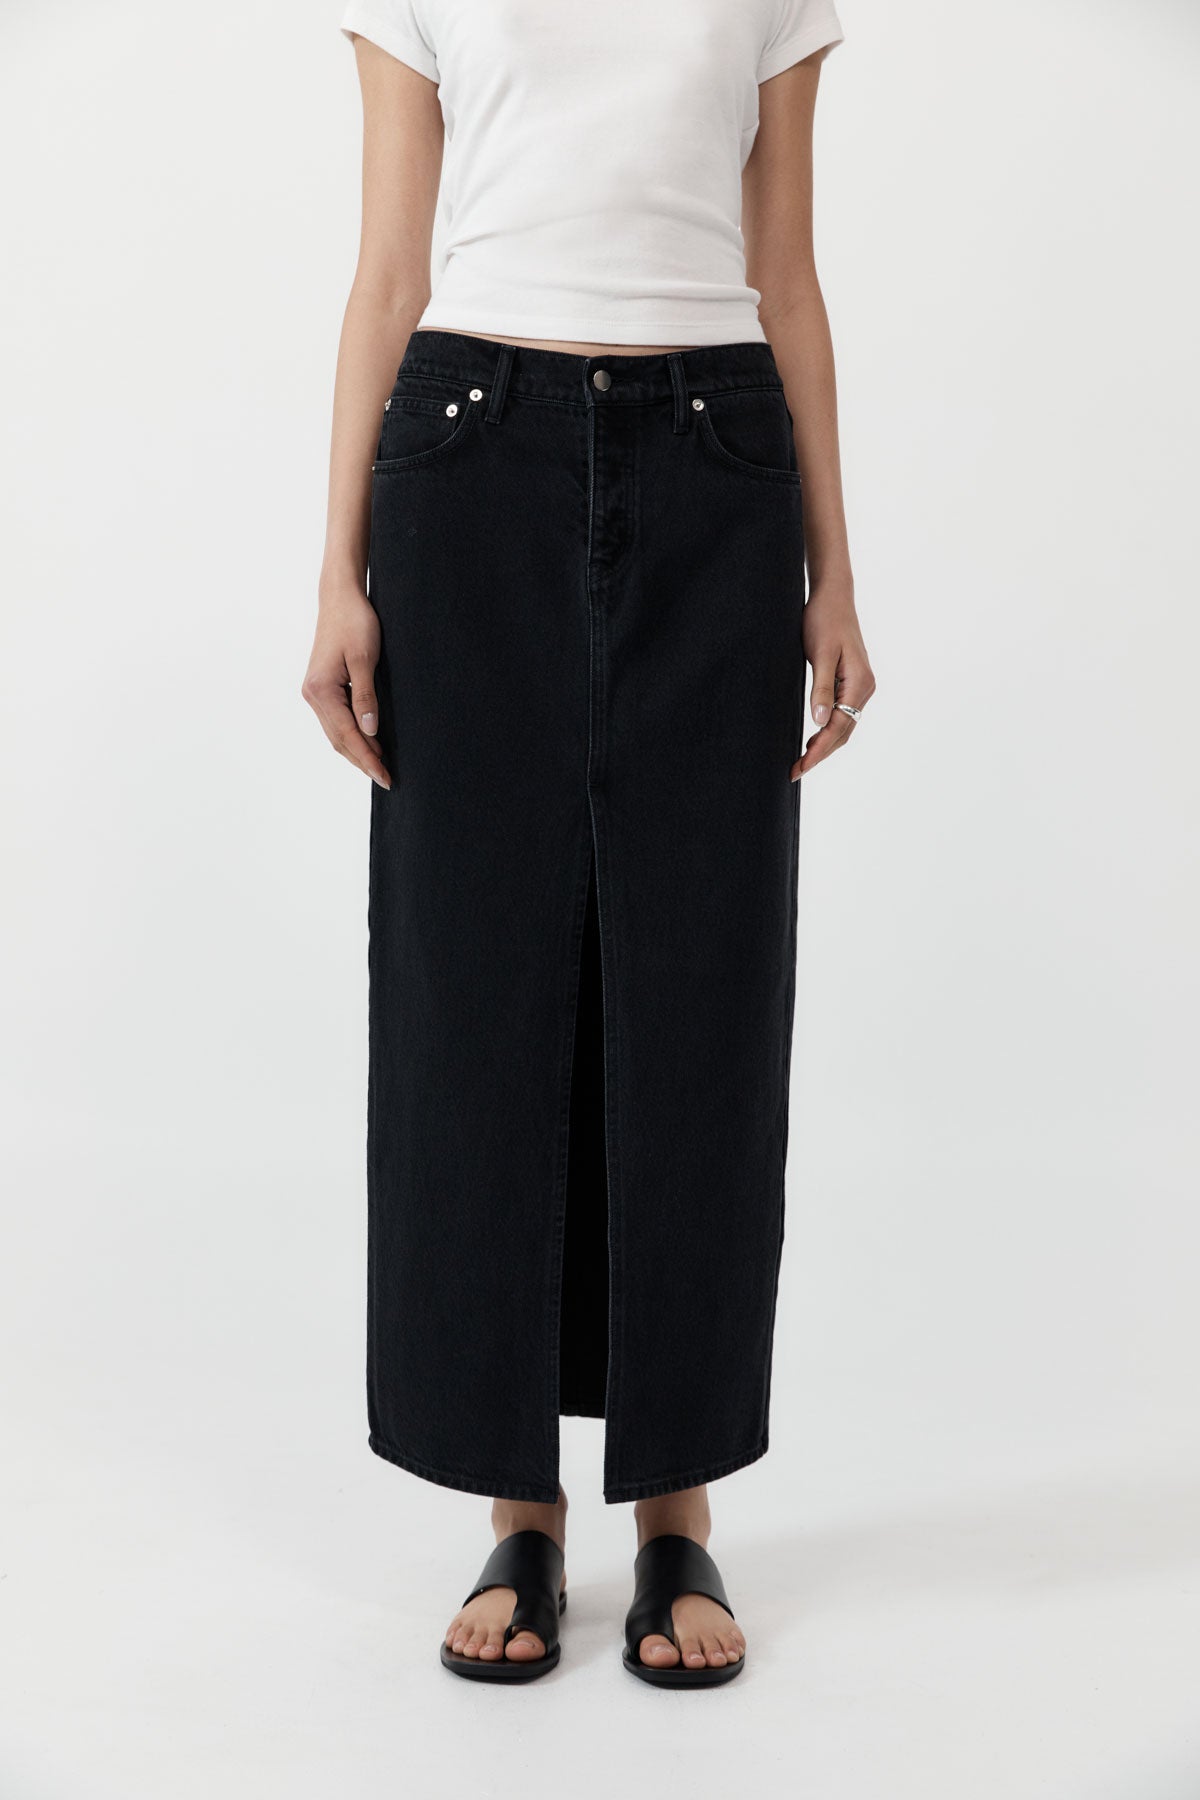 Denim Maxi Skirt - Washed Black